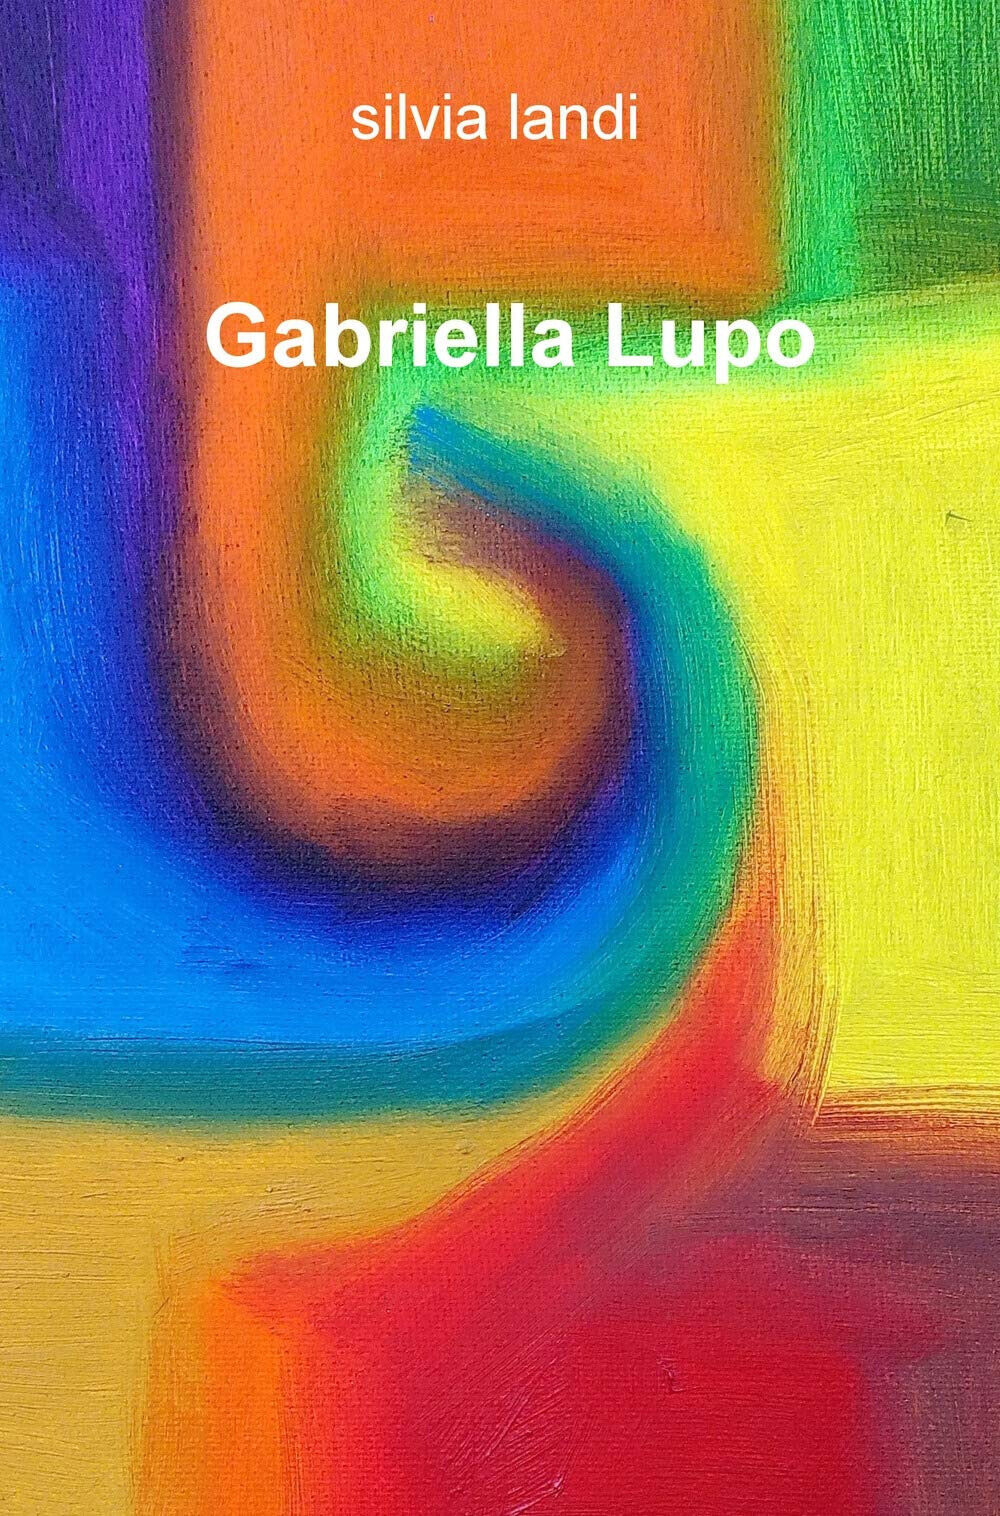 Gabriella Lupo. Ediz. illustrata - Silvia Landi - ilmiolibro, 2019